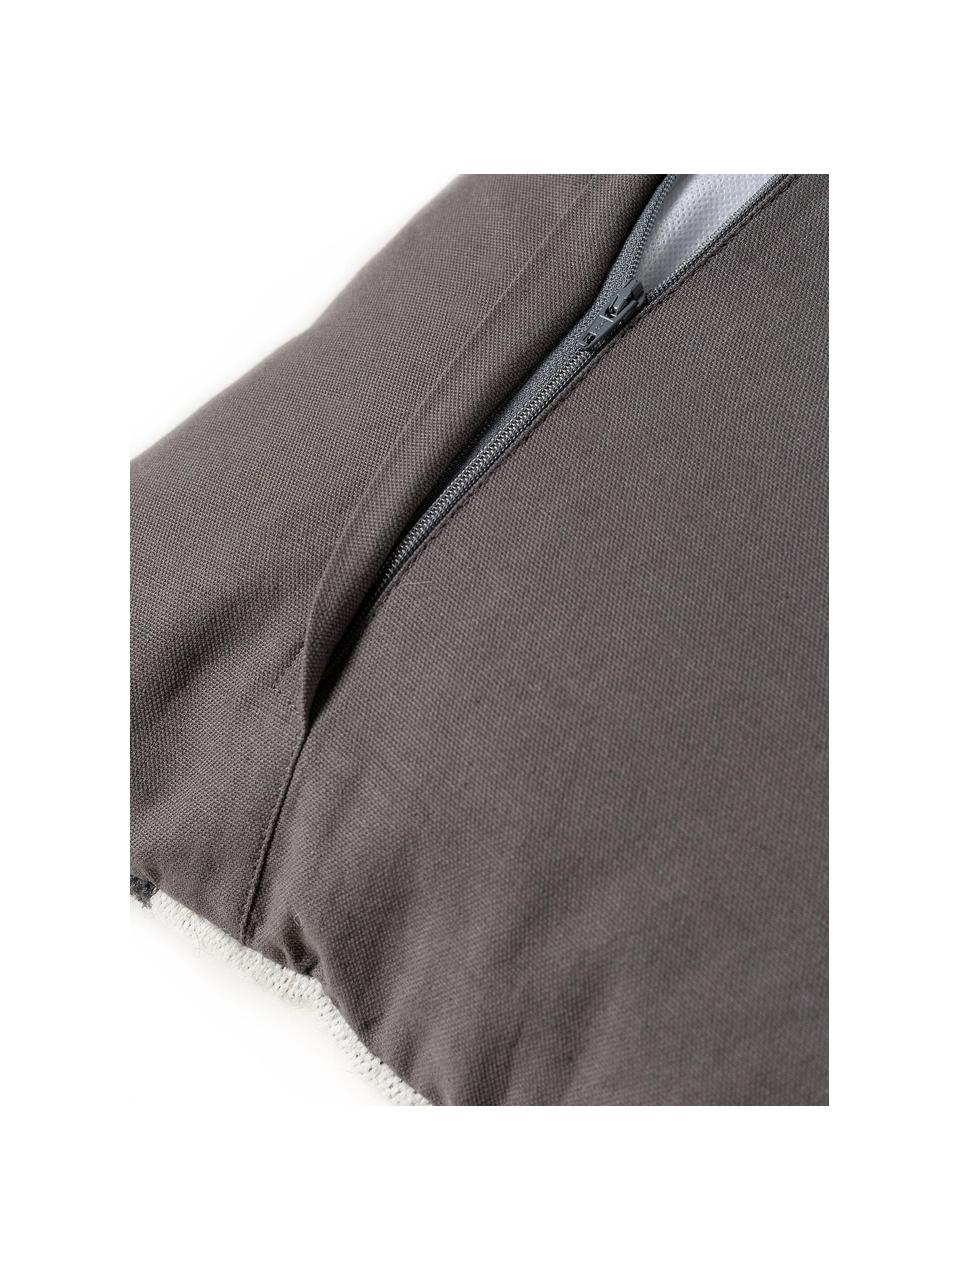 Federa arredo etnica in lana color grigio scuro/grigio Dilan, 80% lana, 20% cotone, Tonalità grigie, Larg. 45 x Lung. 45 cm